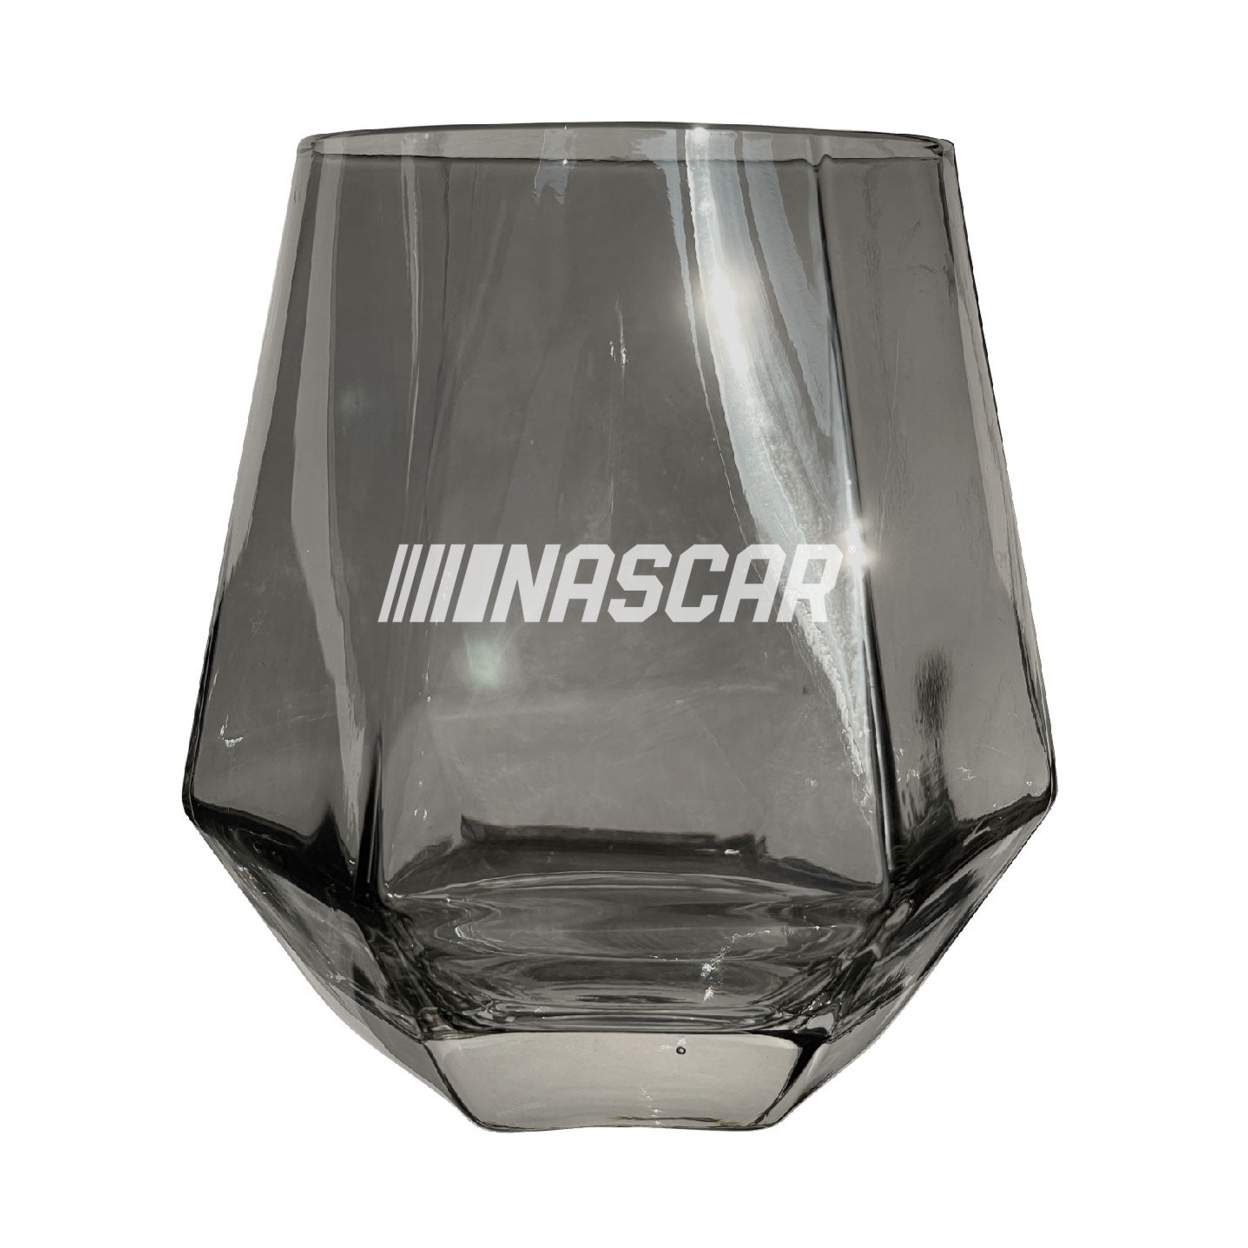 NASCAR Officially Licensed 10 Oz Engraved Diamond Wine Glass - Iridescent, Single